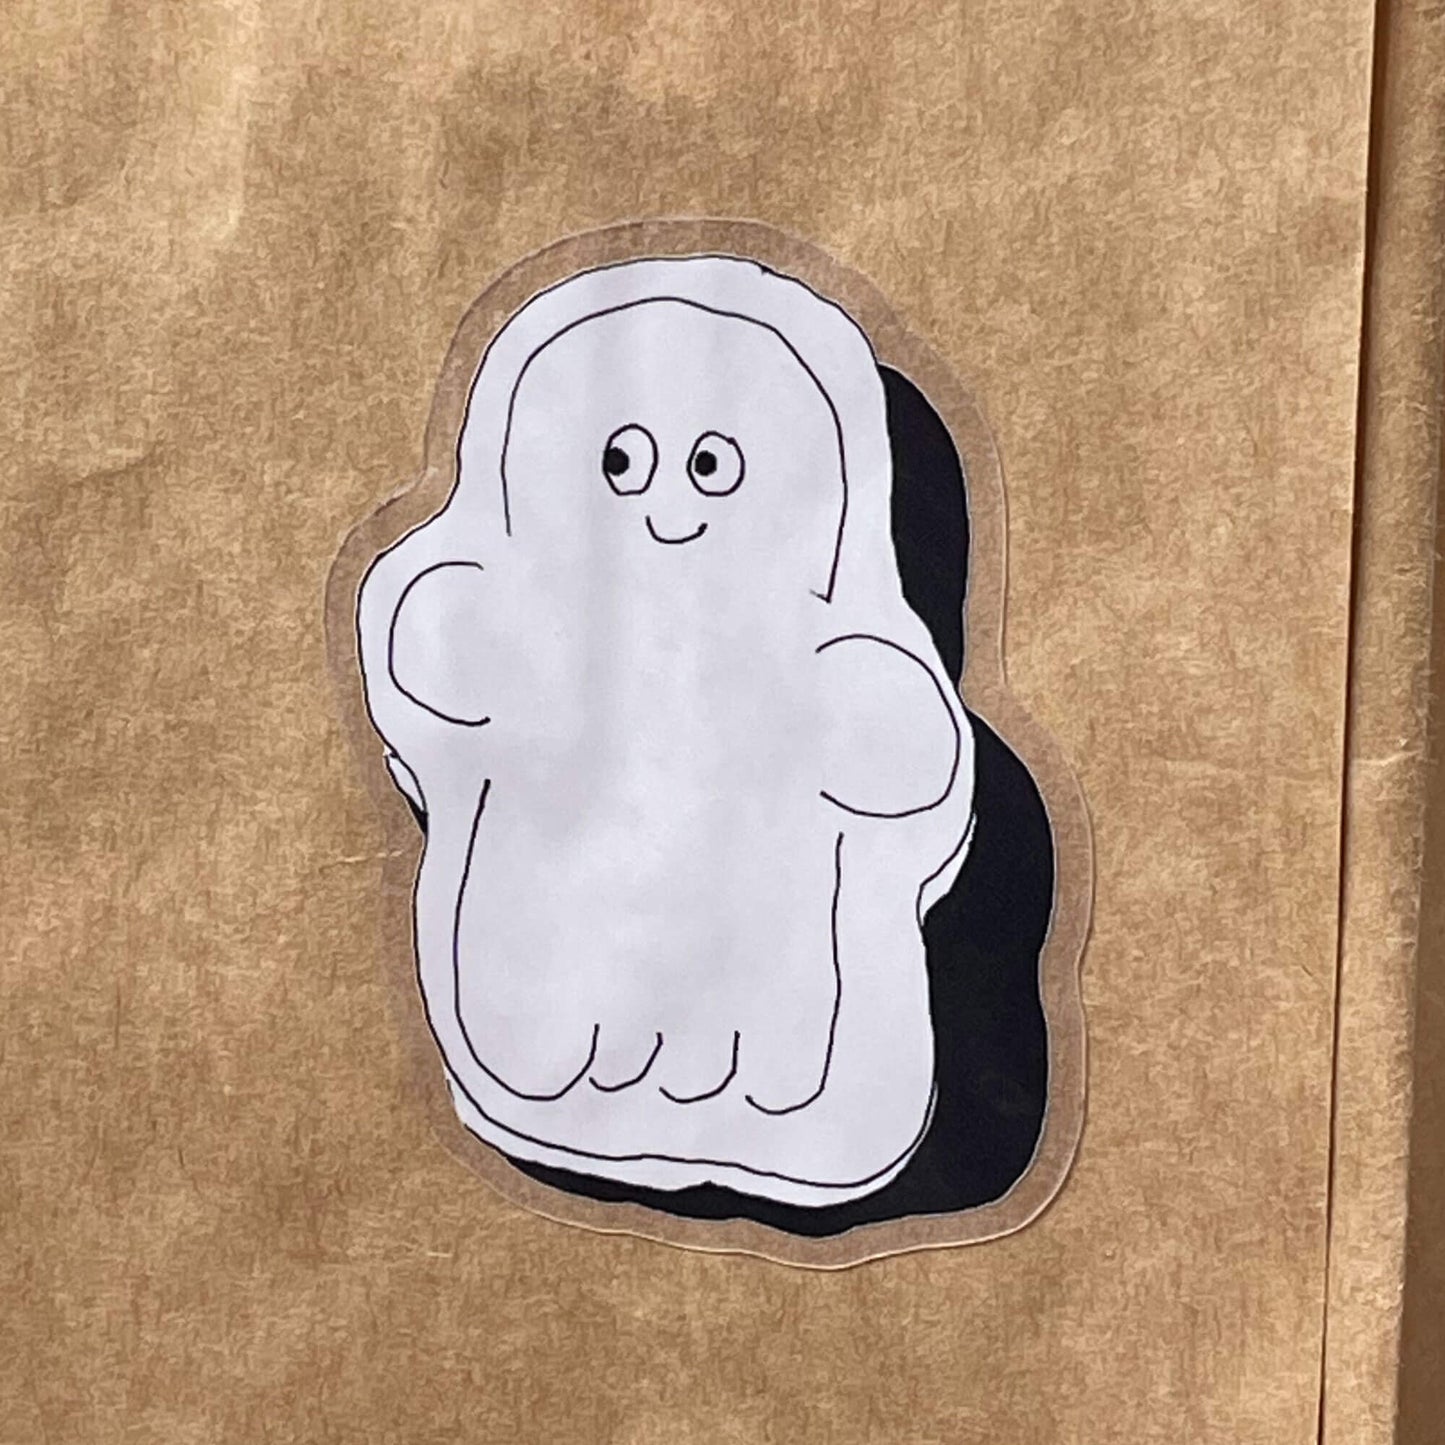 Sticker - Ghost Smile